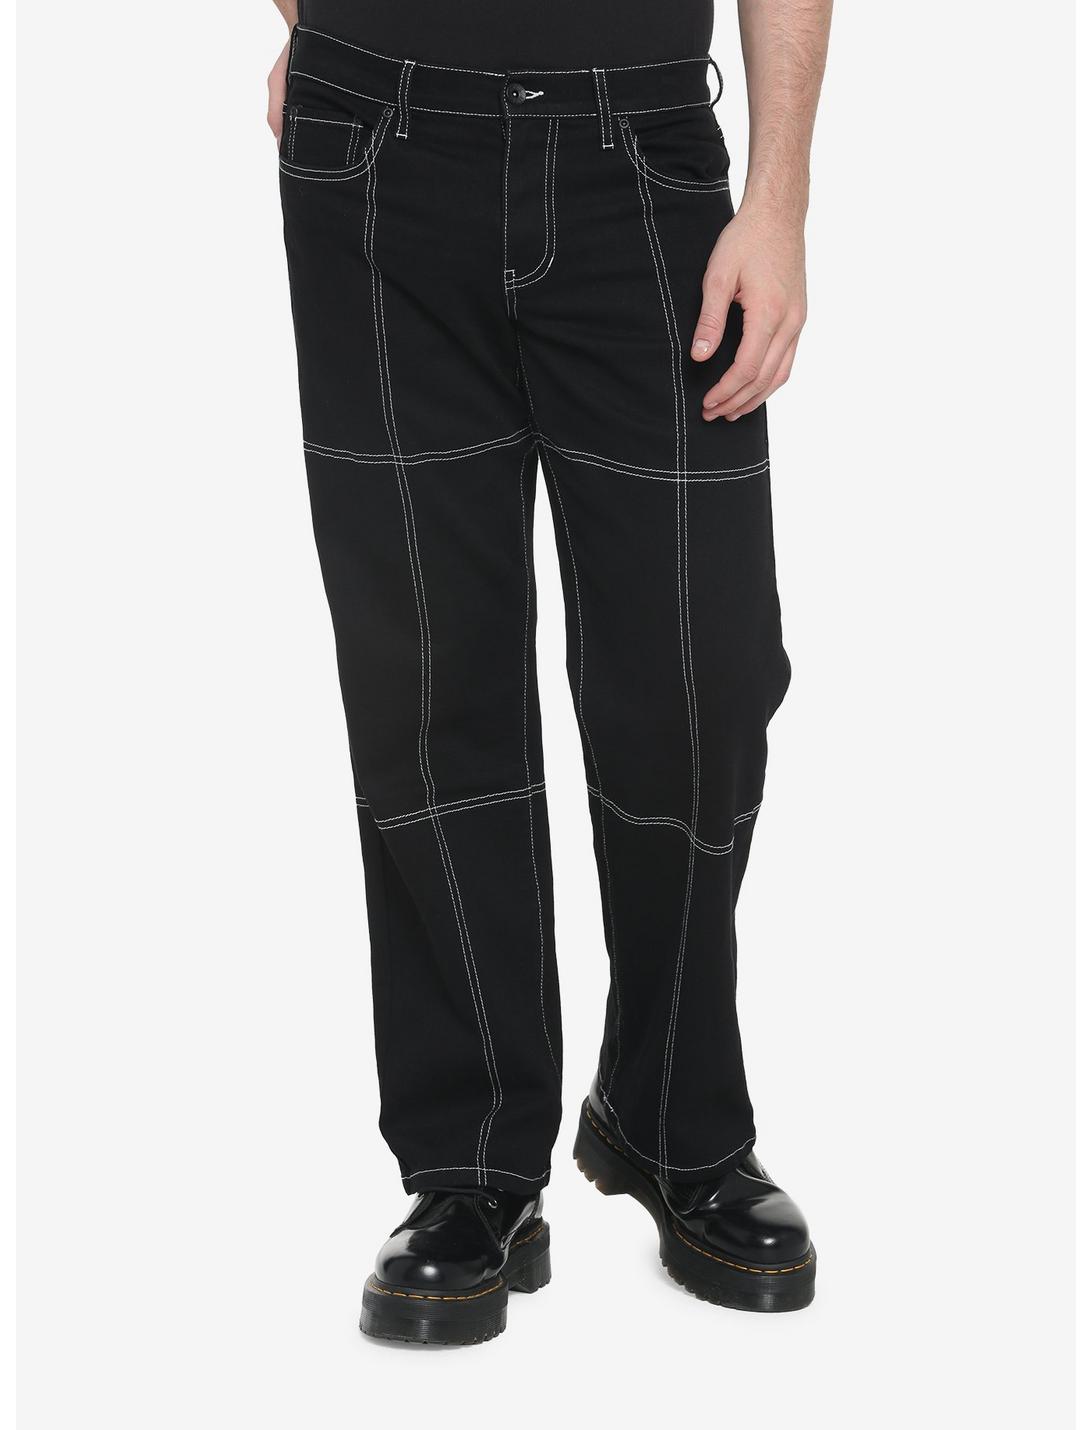 Black & White Contrast Stitch Straight Leg Jeans, BLACK, hi-res